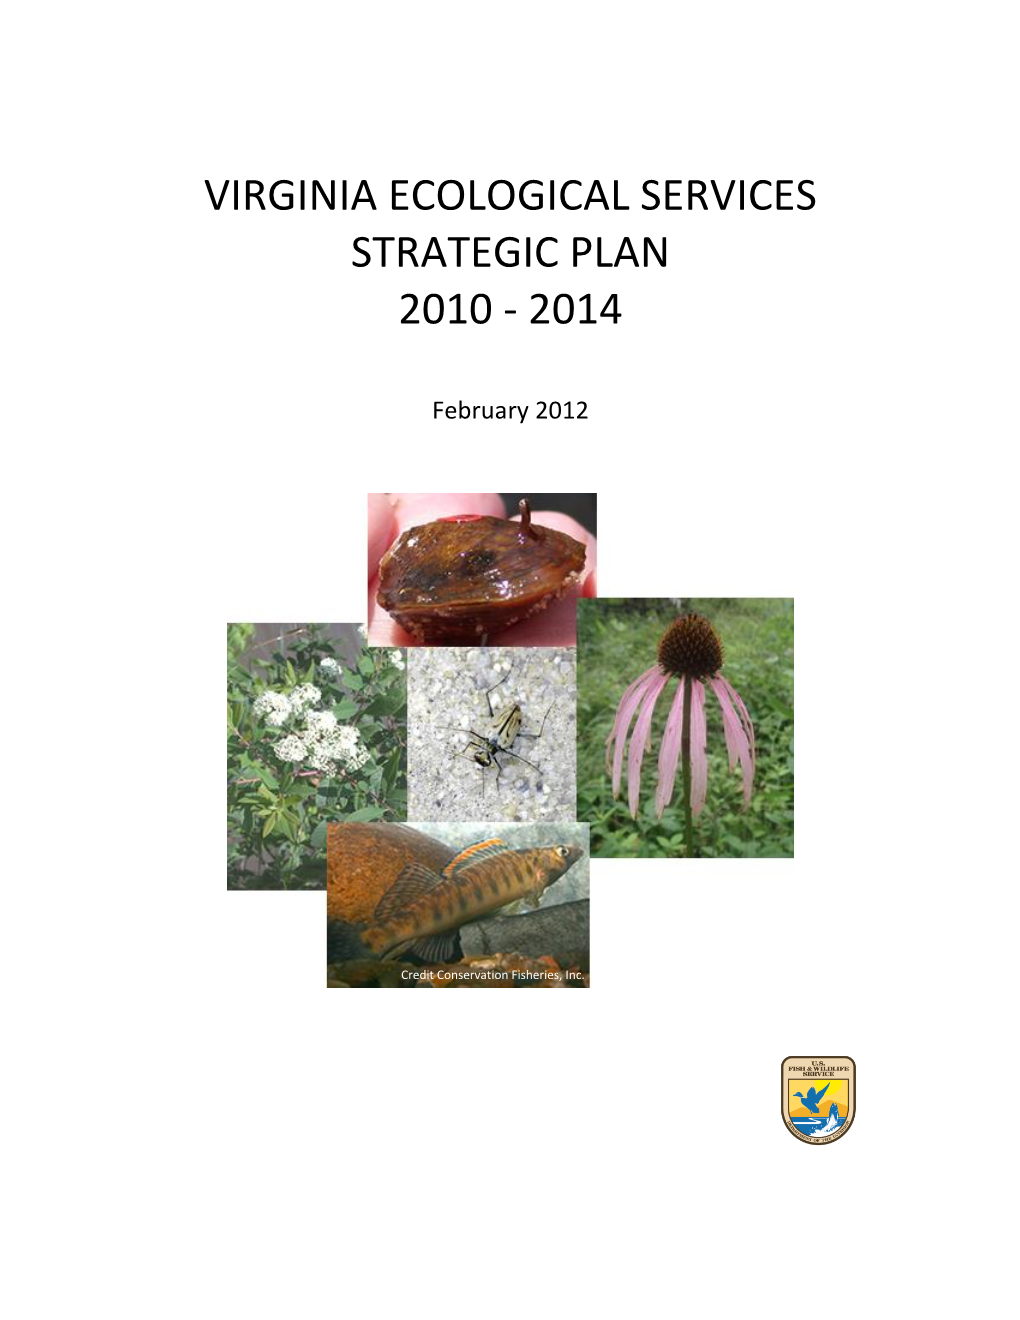 Virginia Ecological Services Strategic Plan 2010 - 2014